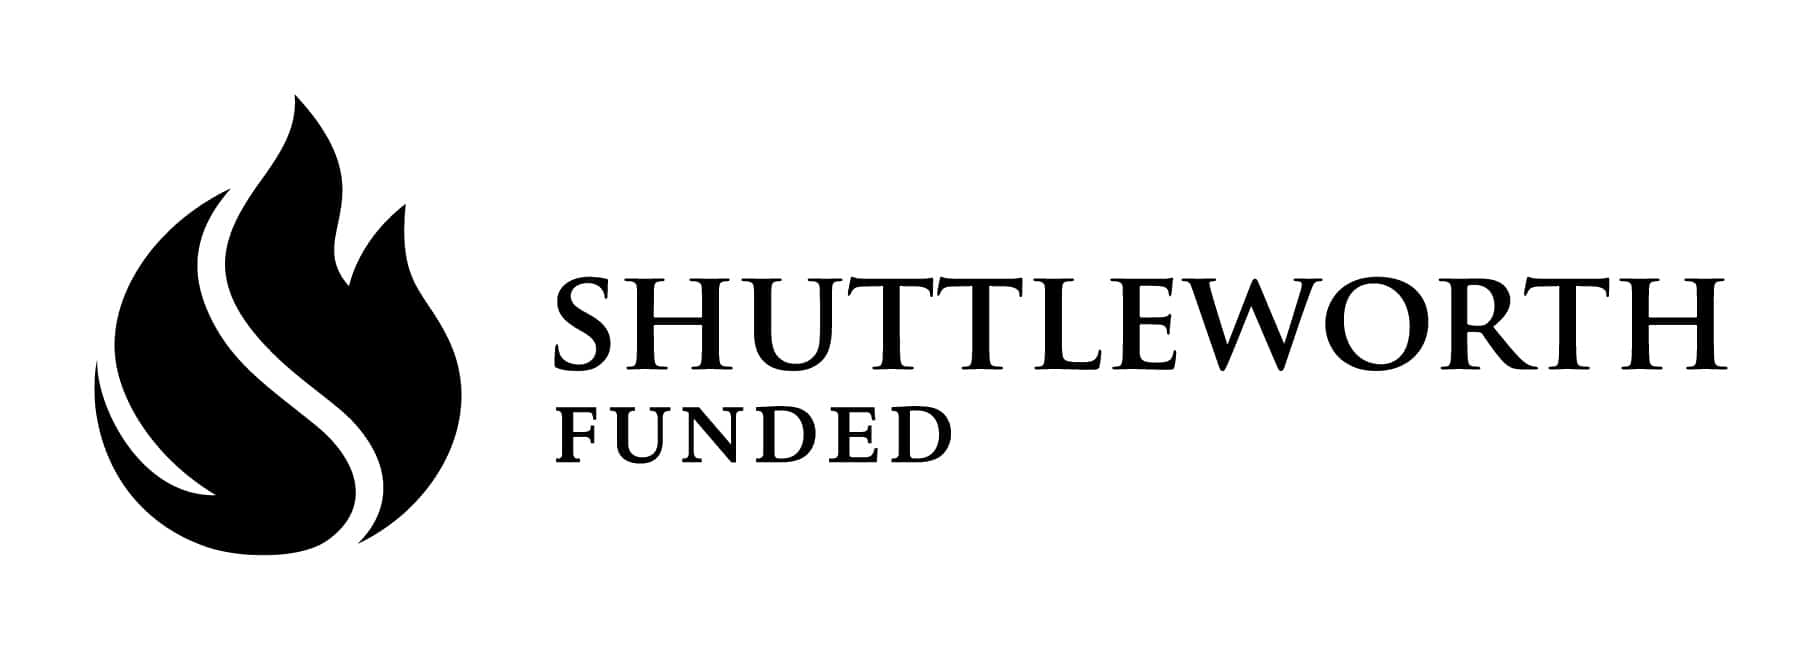 Shuttleworth Funded-01